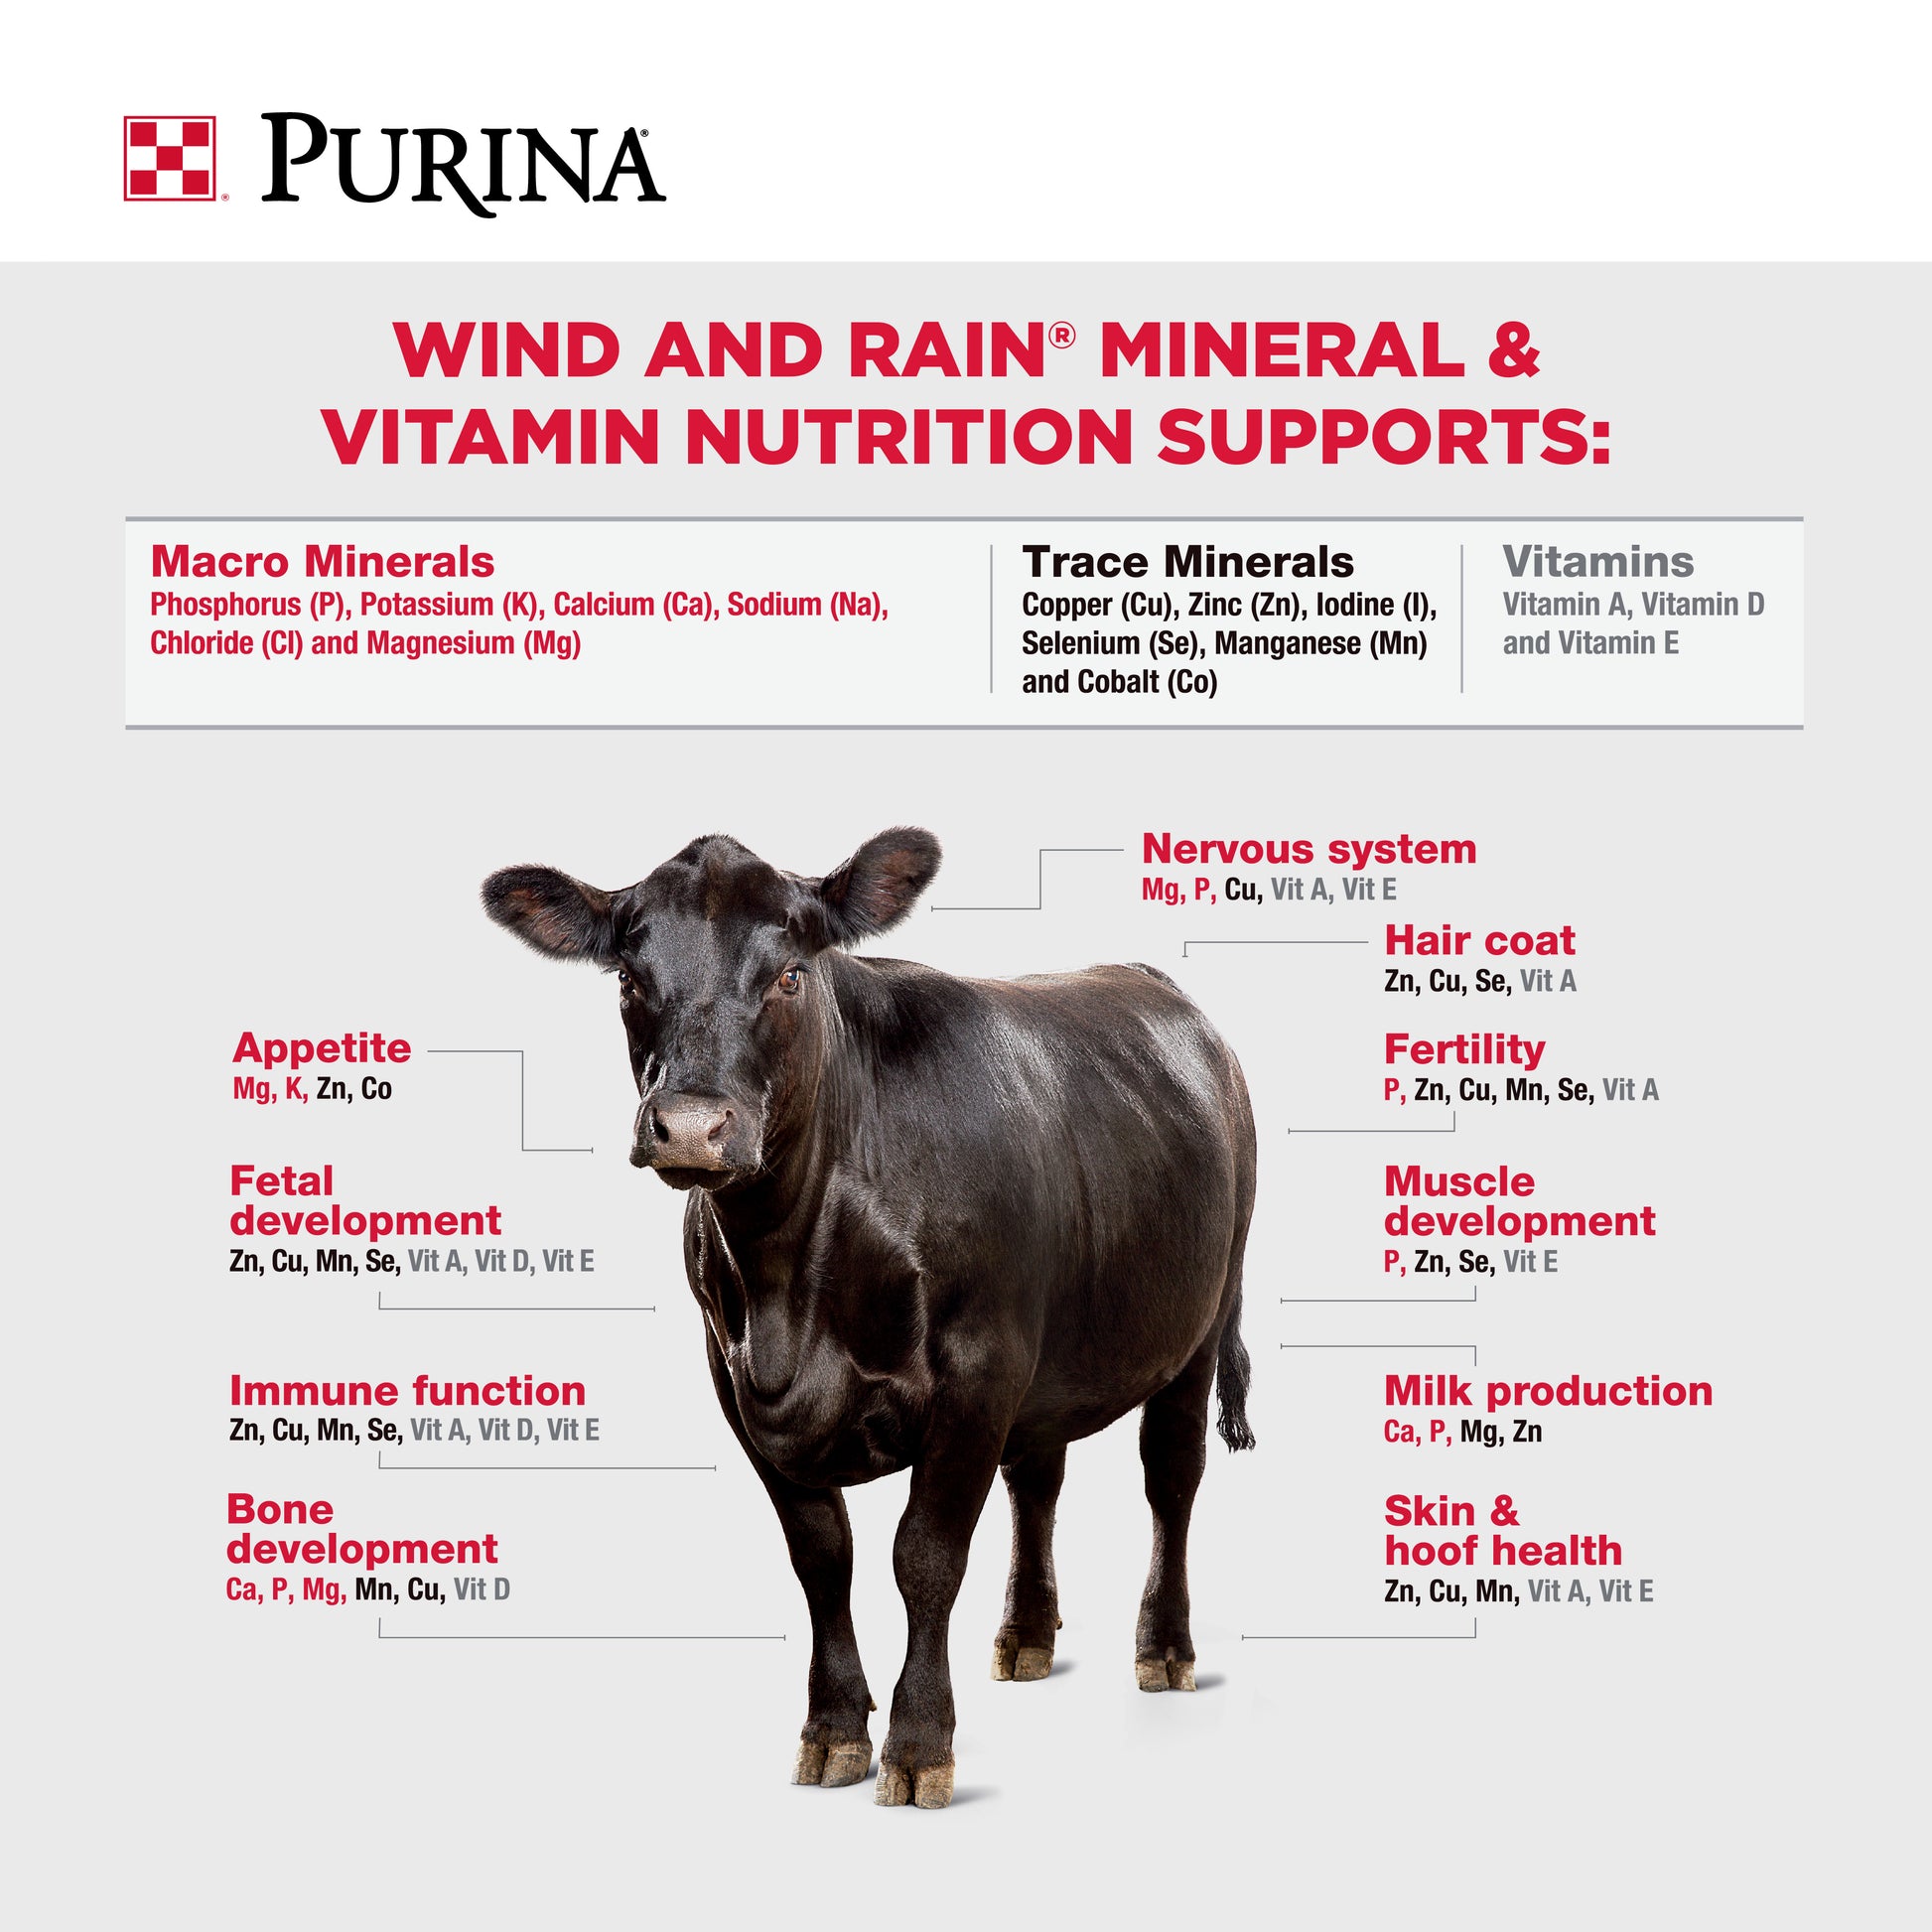 Wind and Rain provides minerals & vitamins